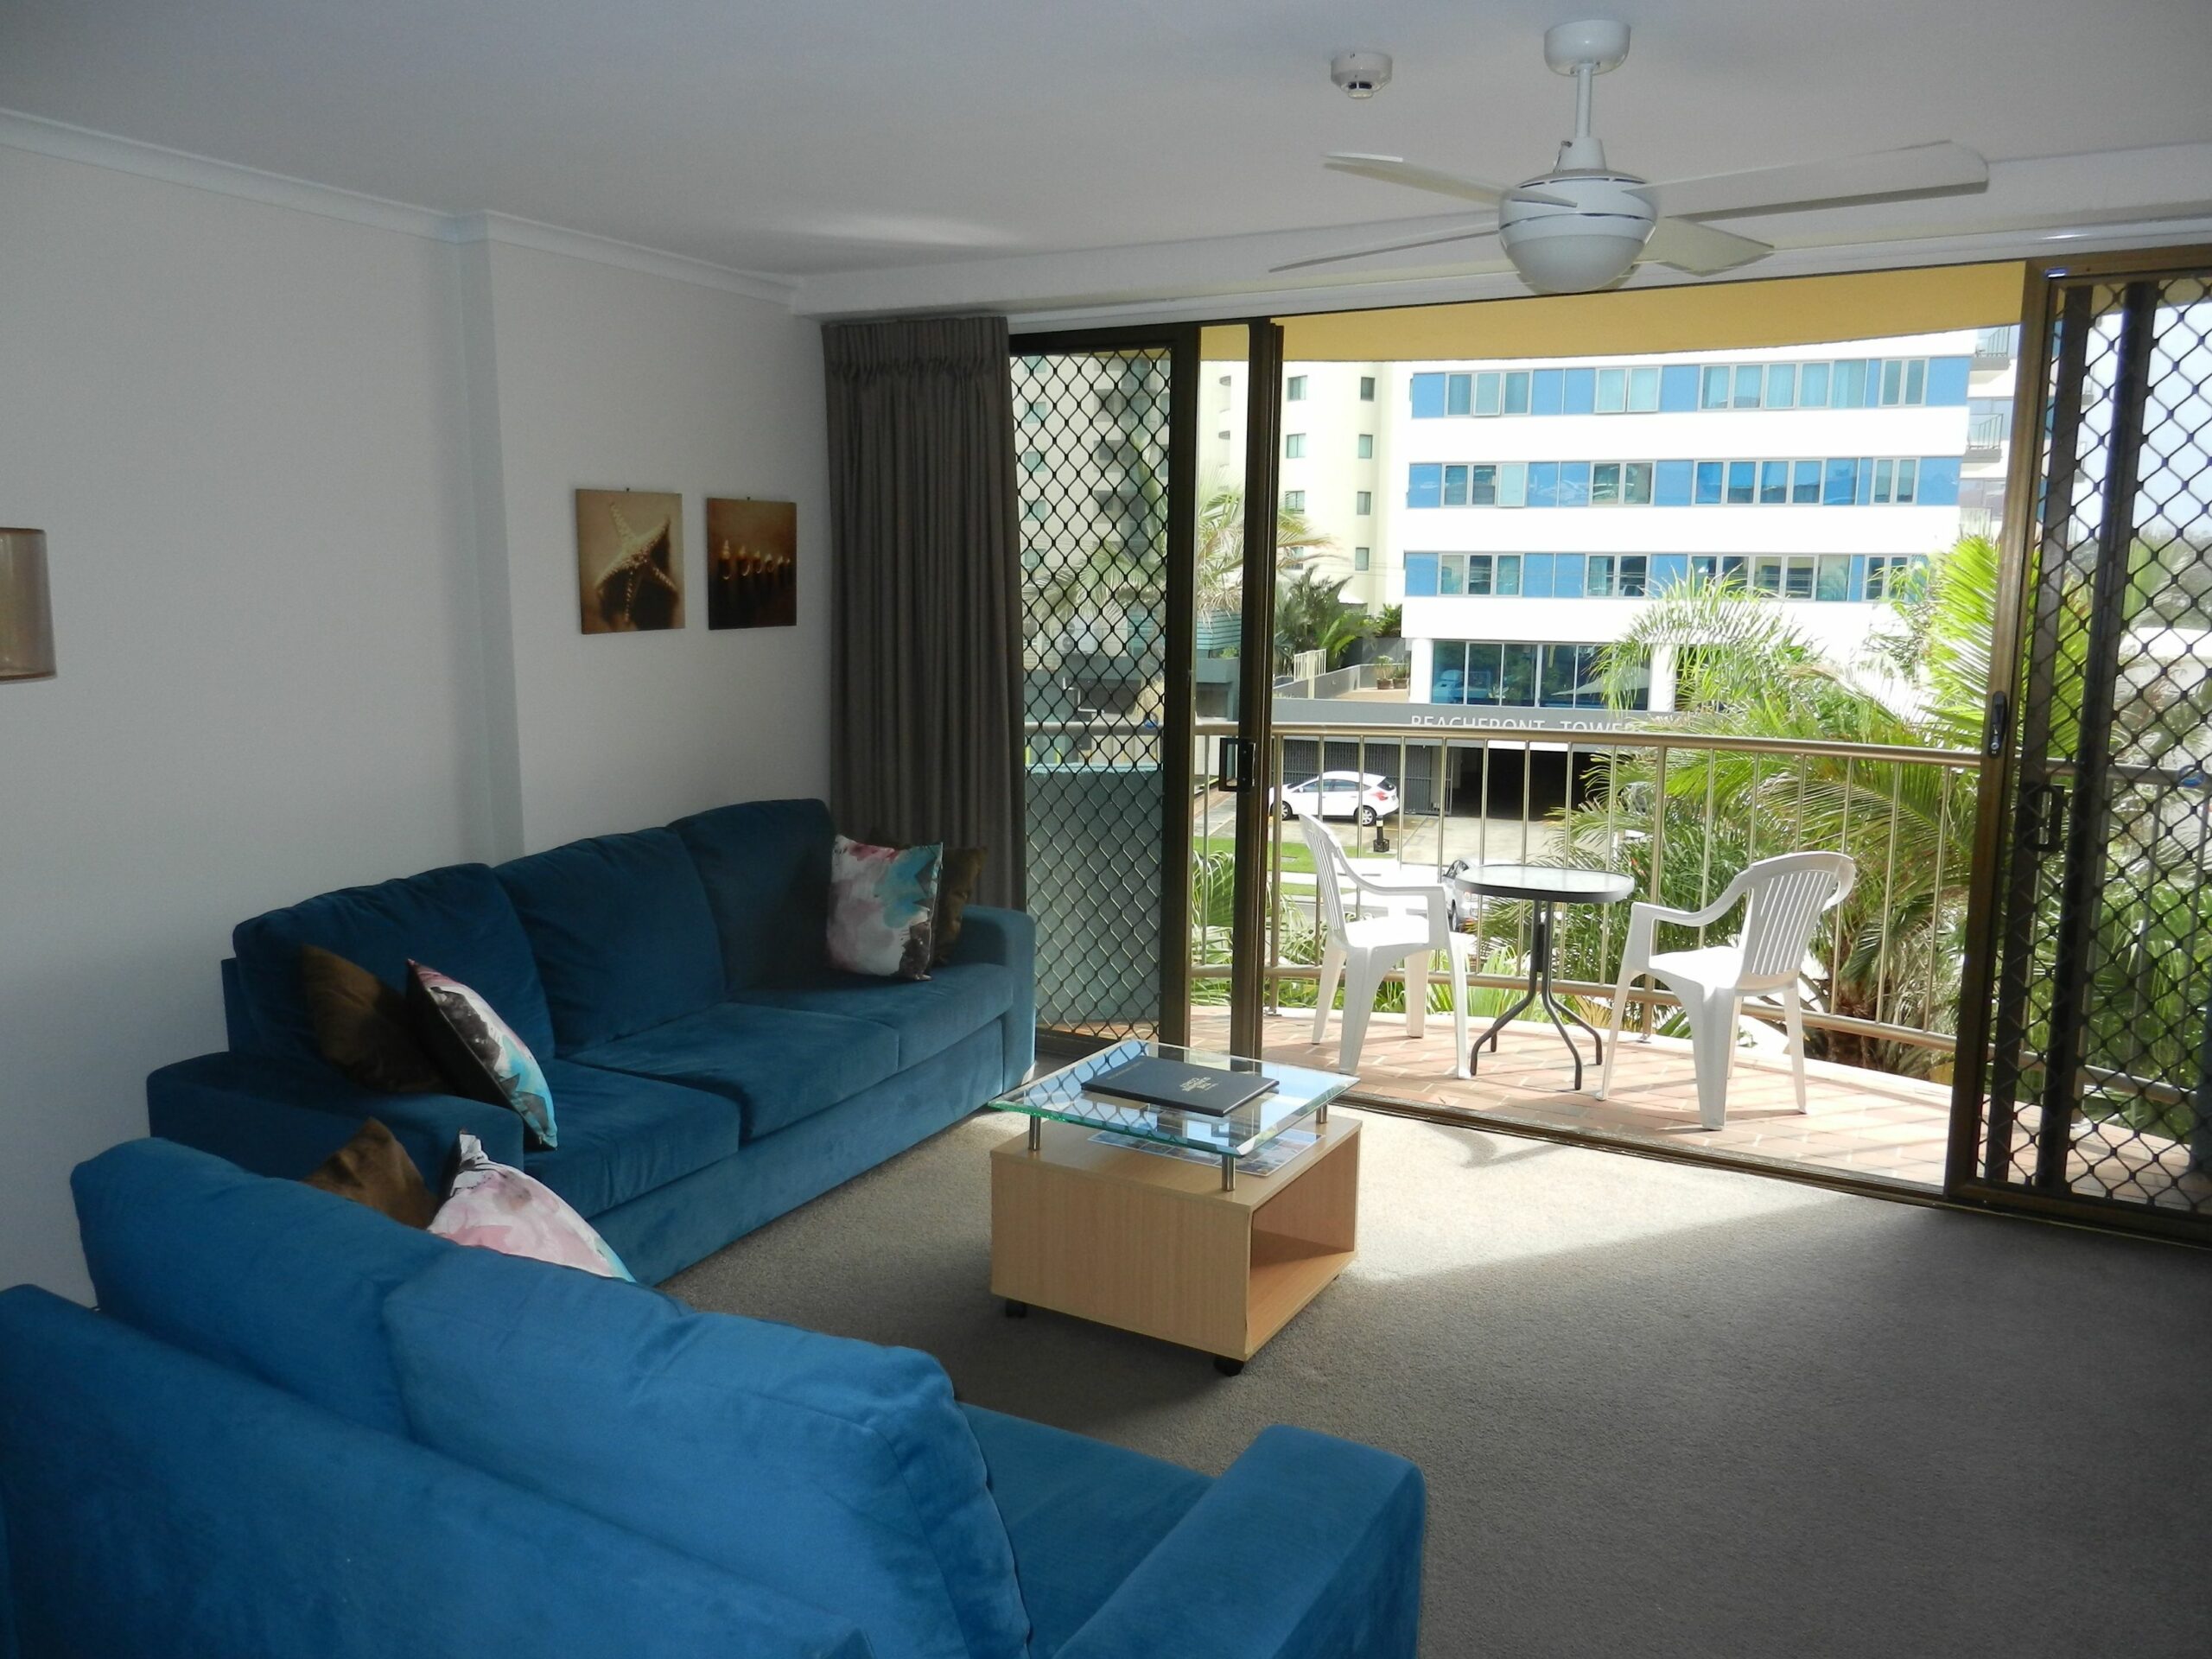 Kalua Holiday Apartments